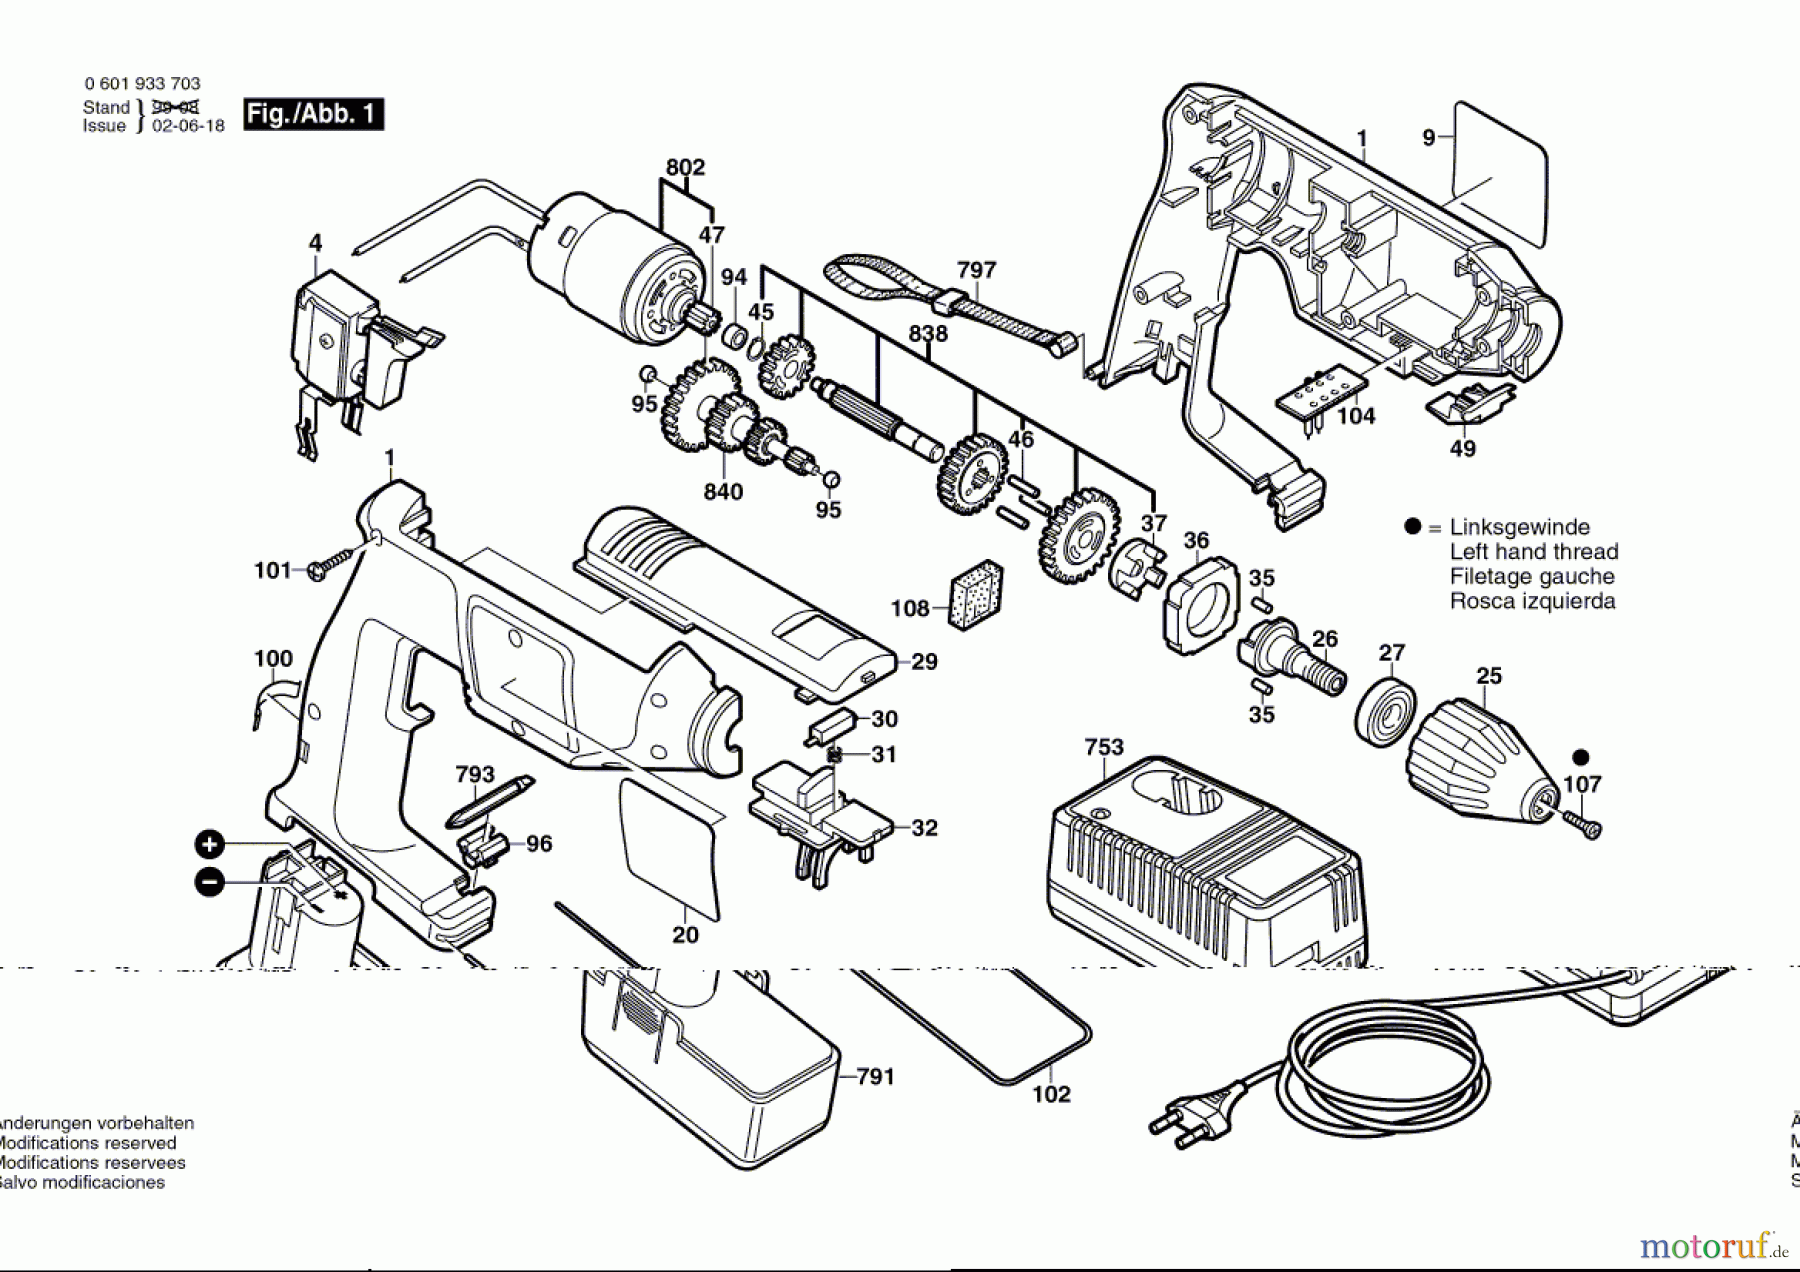  Bosch Akku Werkzeug Akku-Bohrmaschine GBM 9,6 VES-3 Seite 1